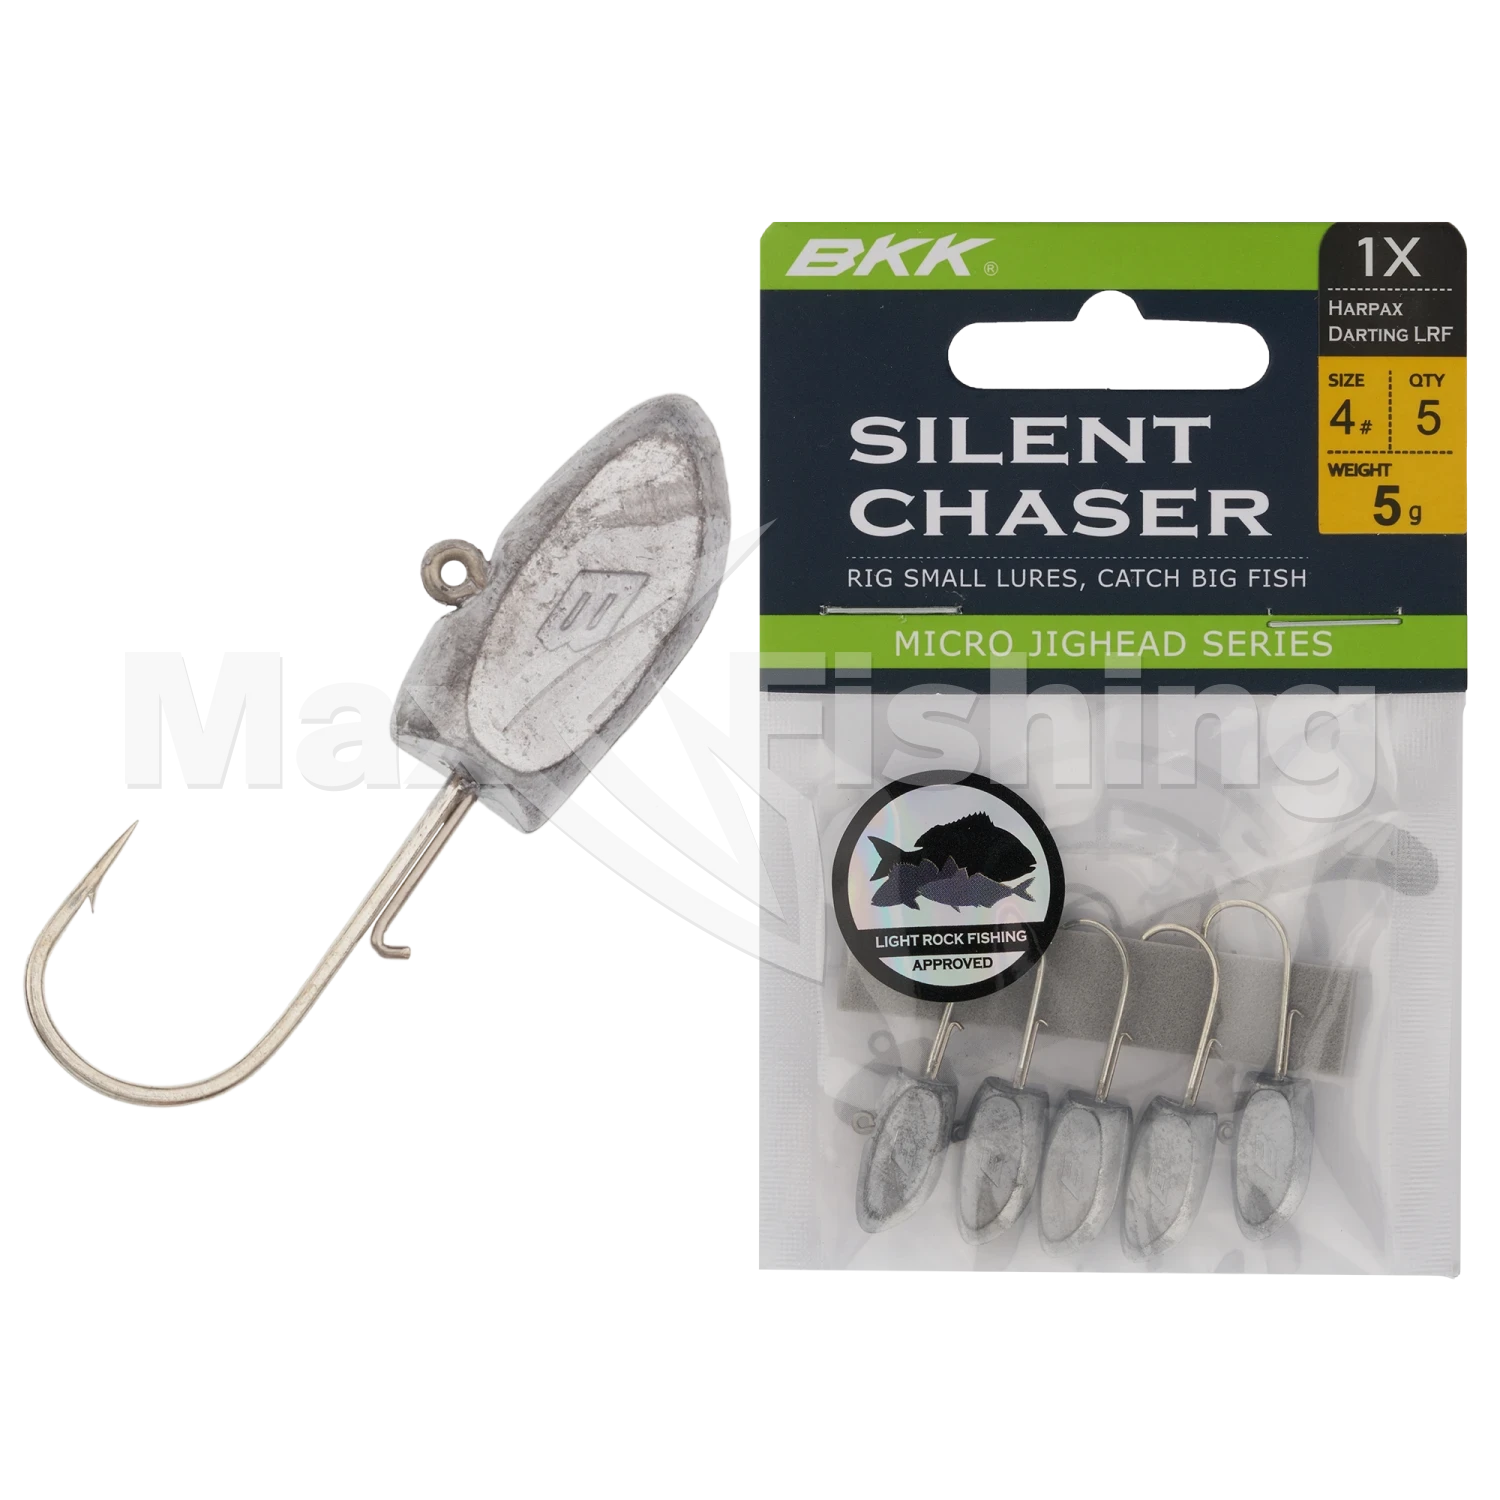 Джиг-головка BKK Silent Chaser Harpax Darting LRF #4 5гр